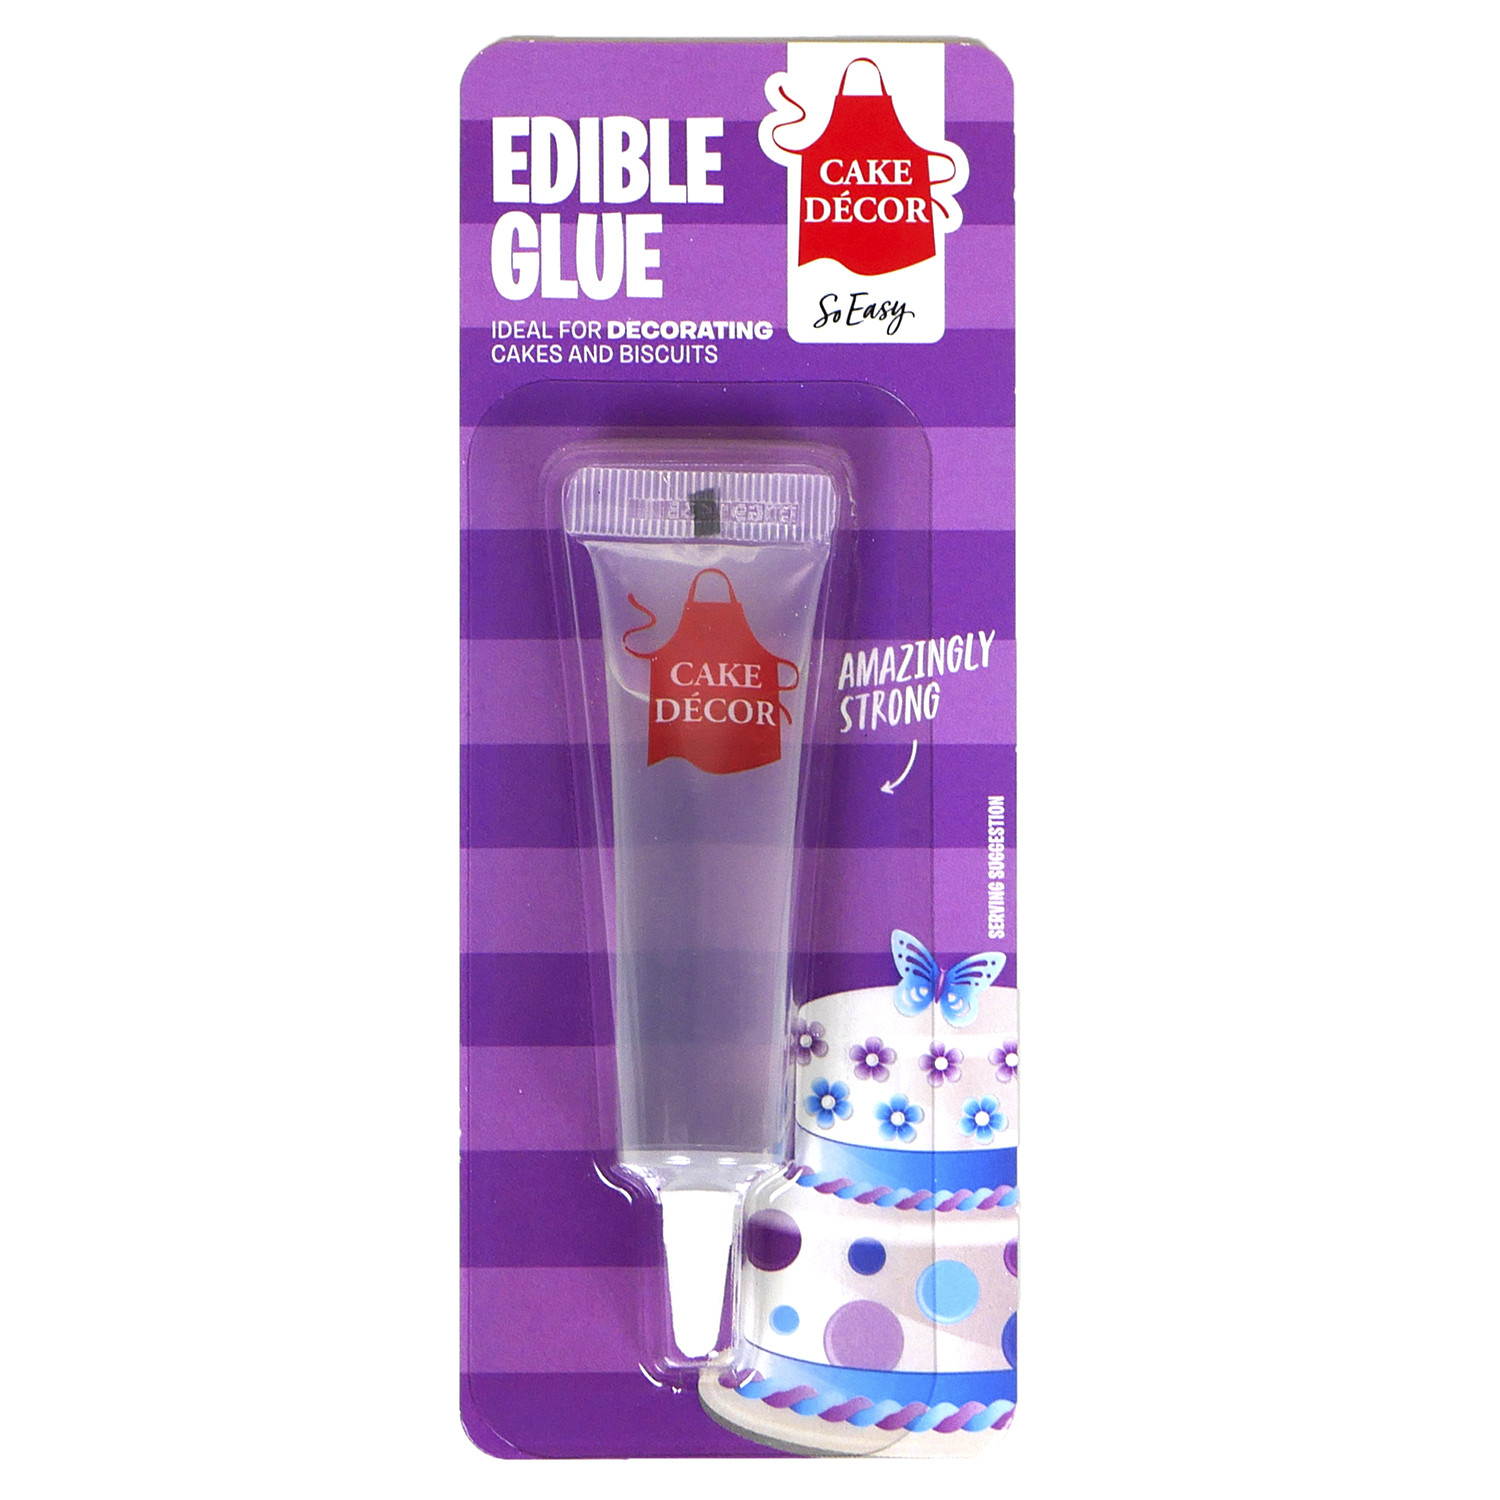 Edible Glue Image